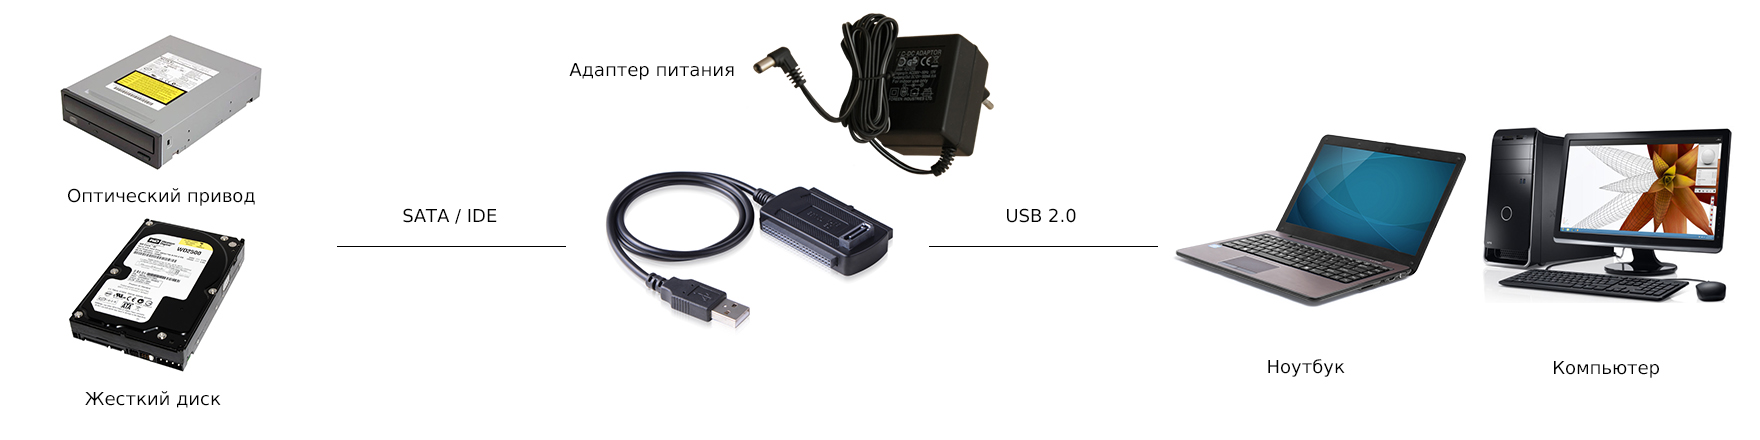 Конвертер-переходник, USB 2.0 > SATA/IDE поддержка SATA 2,5" / 3,5" / 5,25"